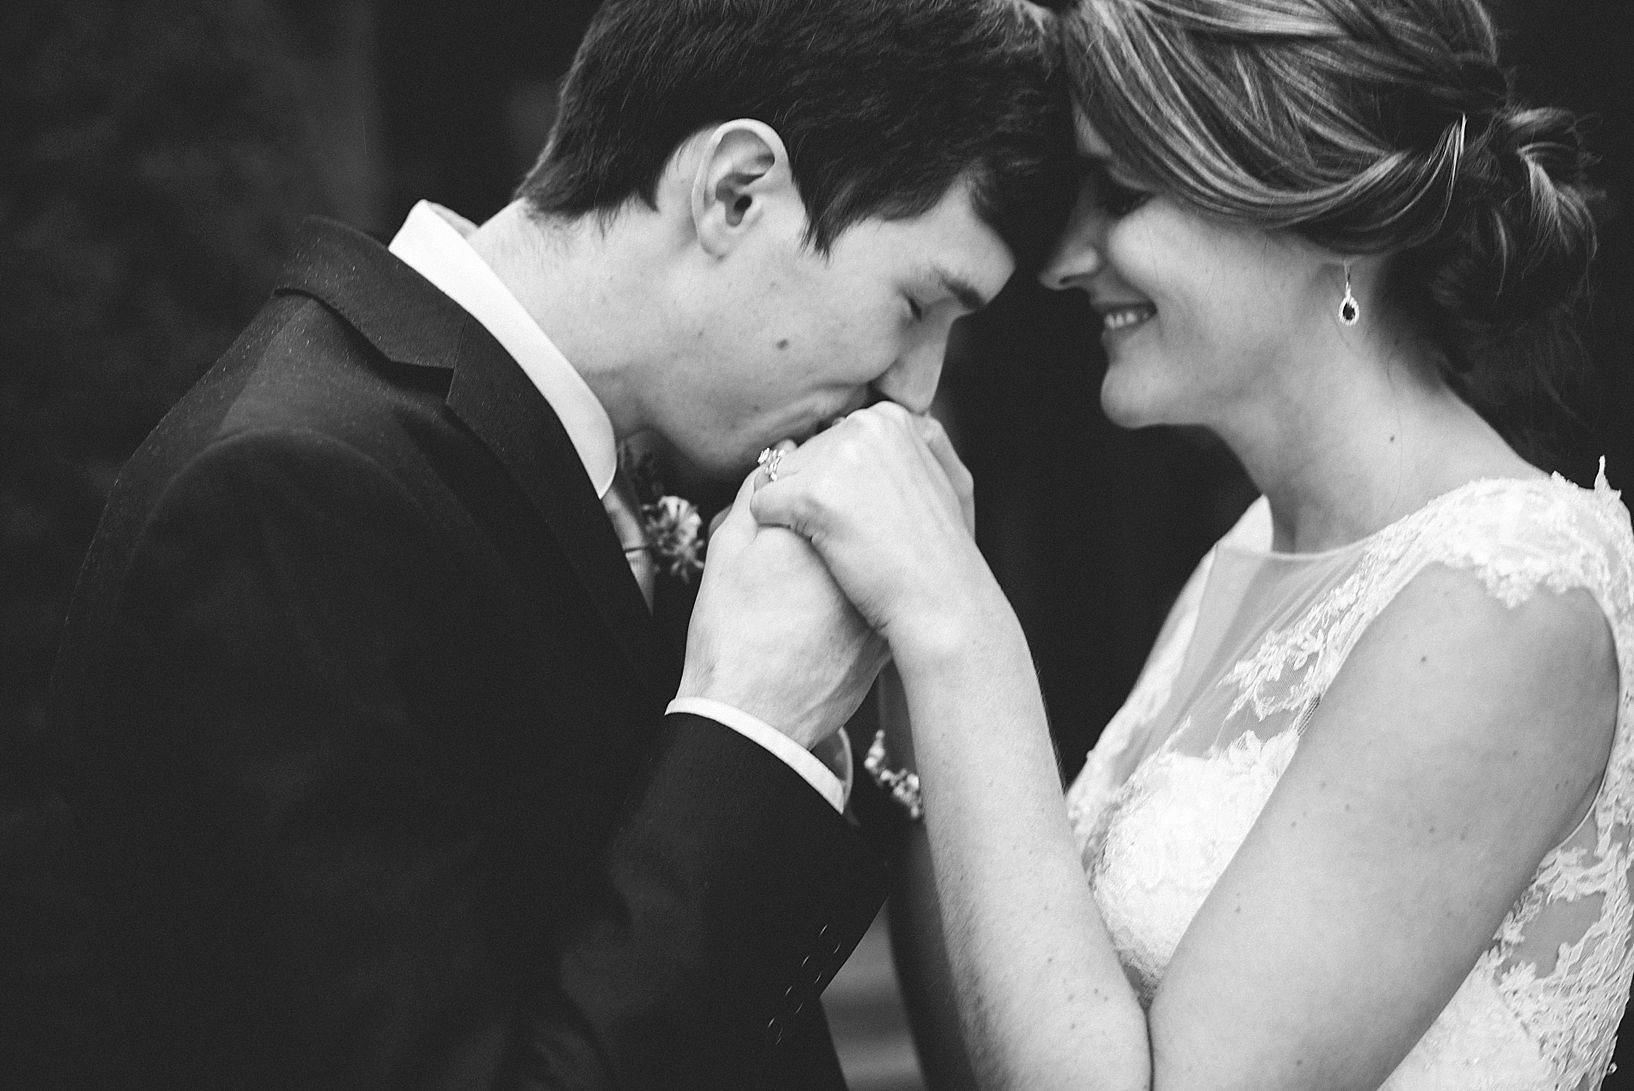 groom kissing bride's hands